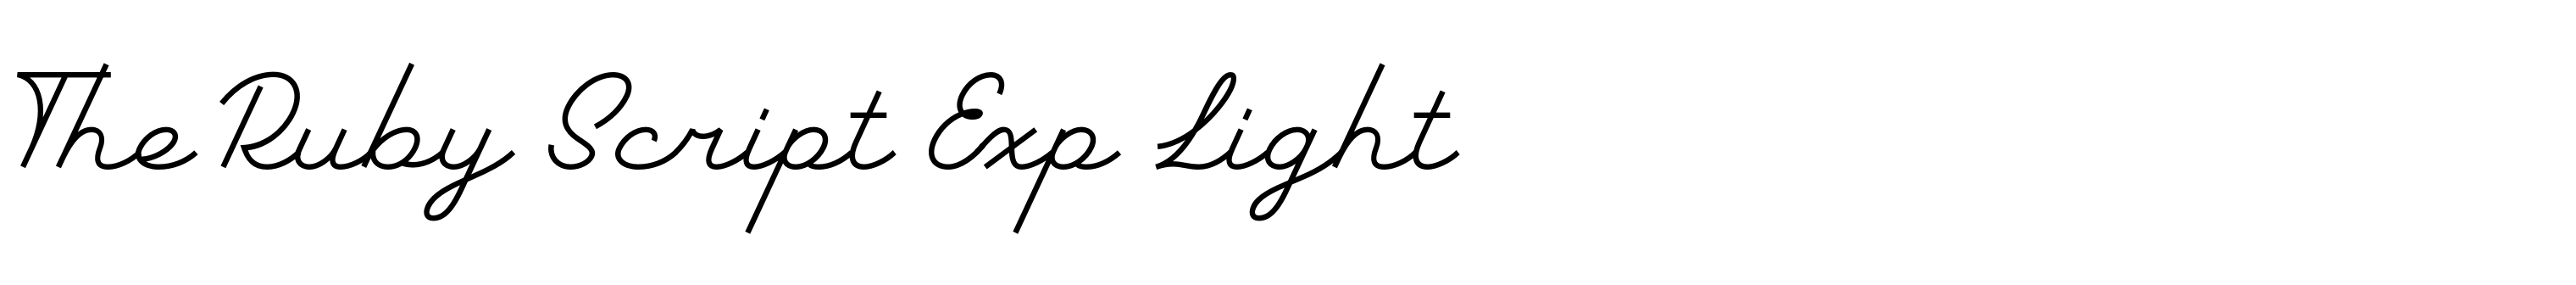 The Ruby Script Exp Light